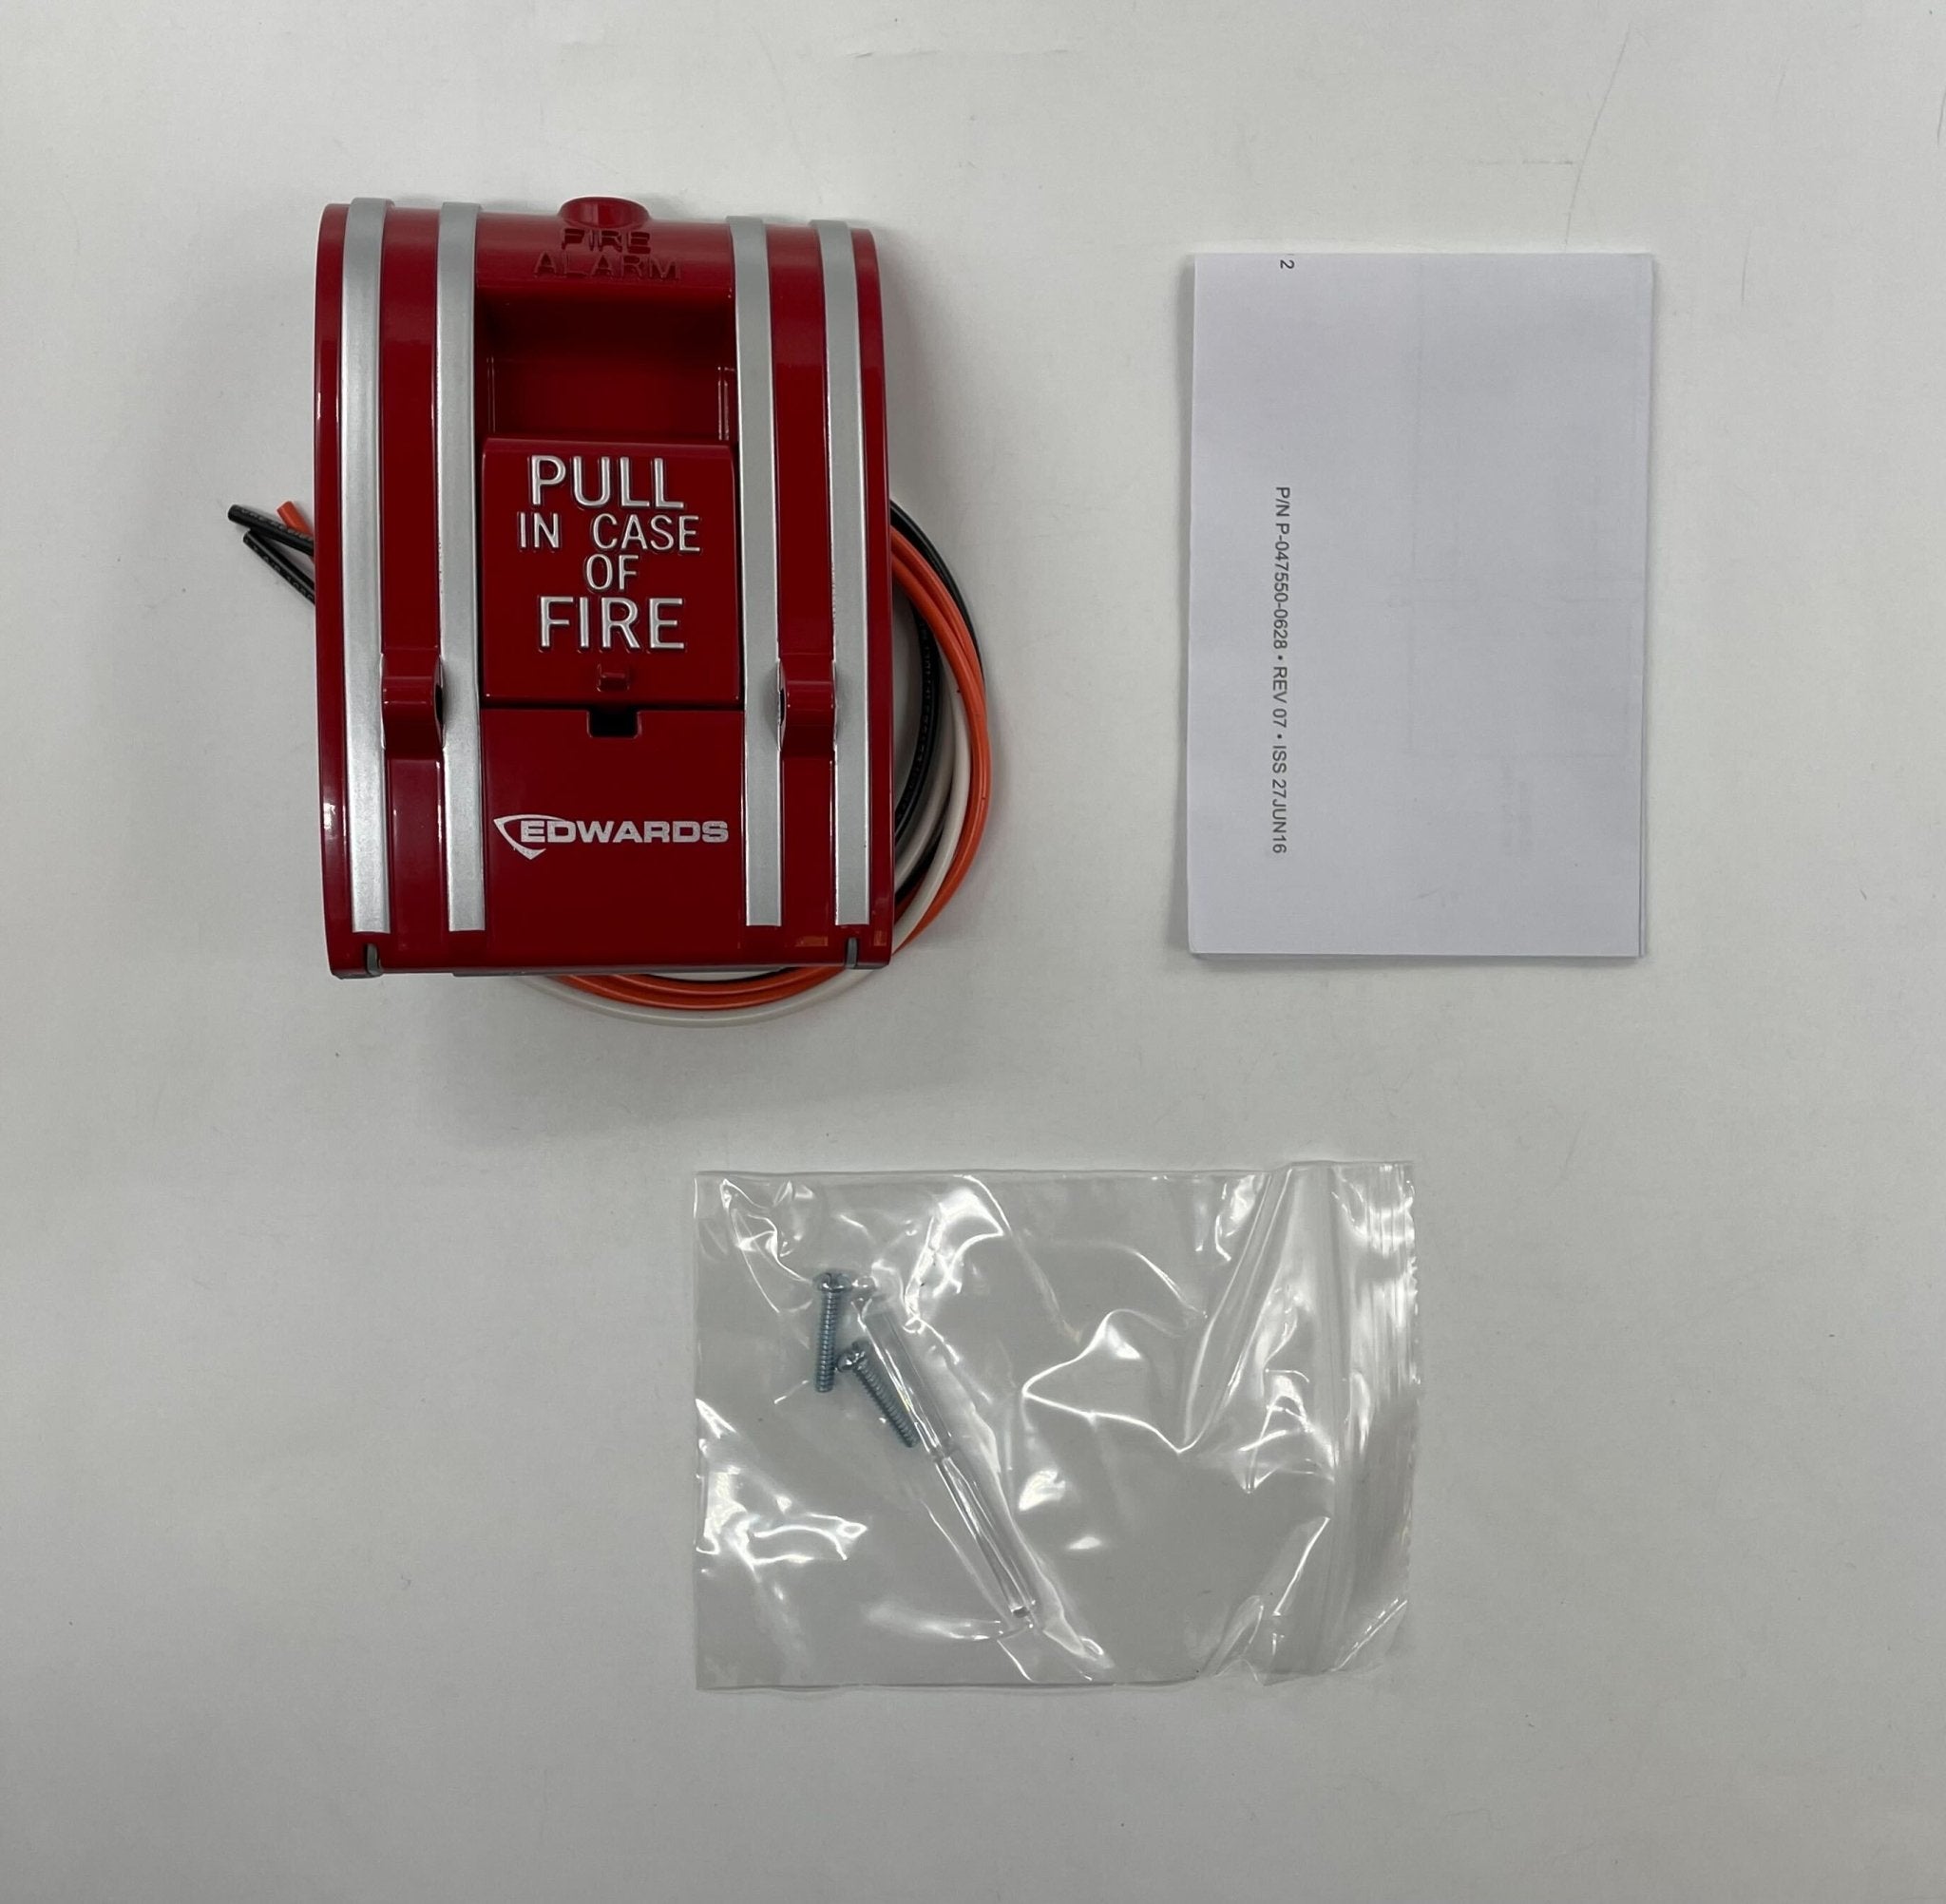 Edwards 270A-DPO - The Fire Alarm Supplier